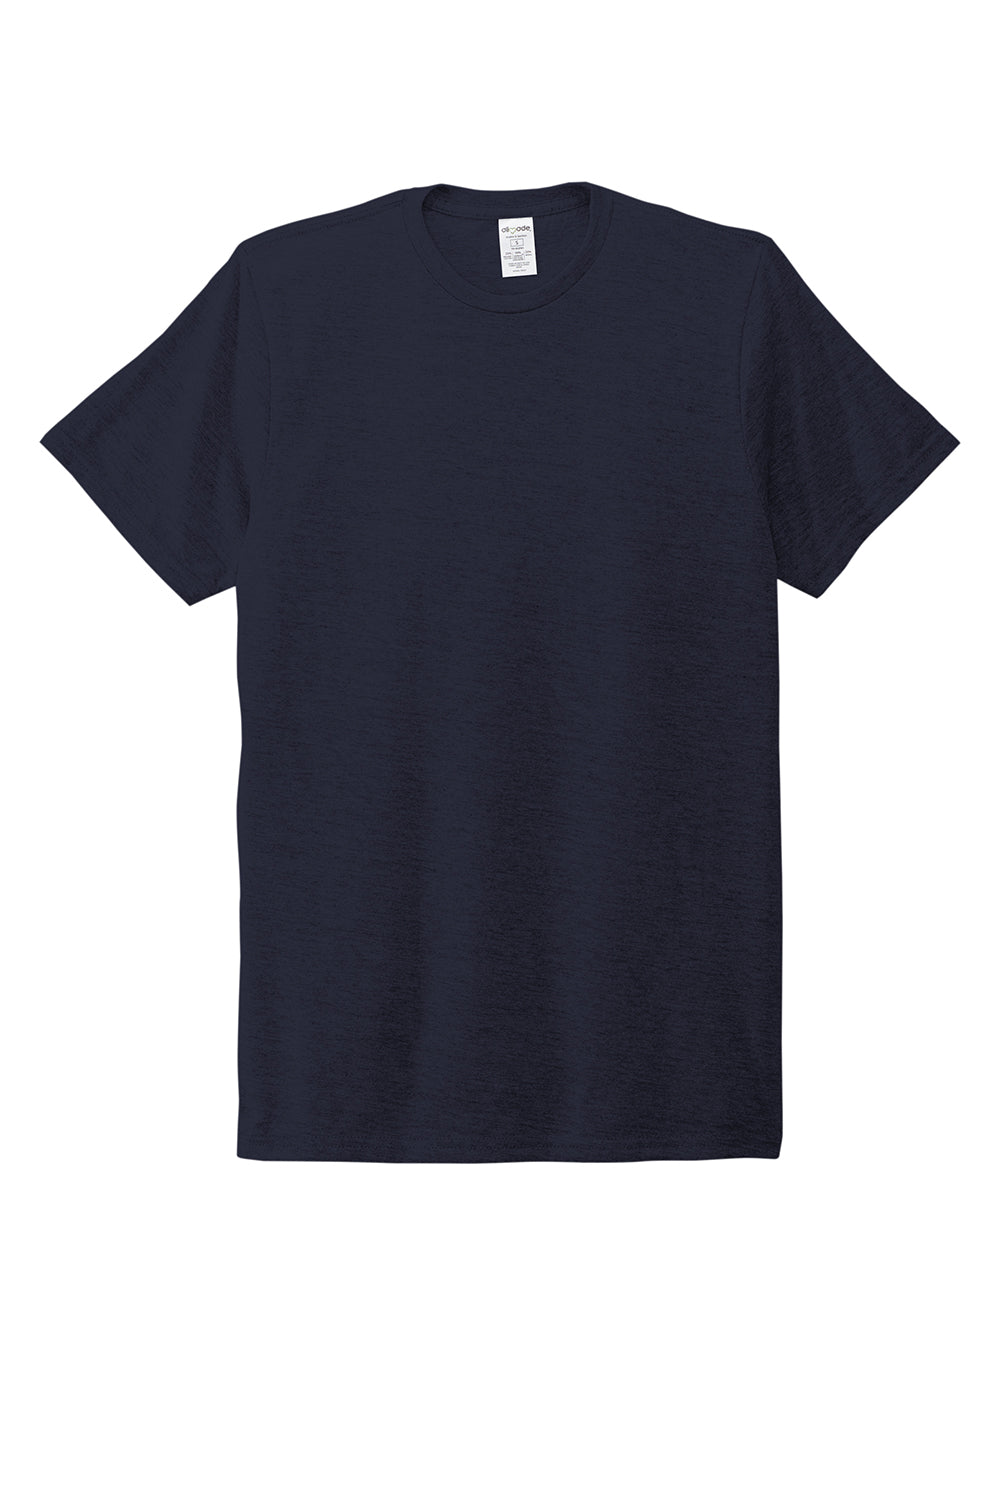 Allmade AL2004 Mens Short Sleeve Crewneck T-Shirt Night Sky Navy Blue Flat Front